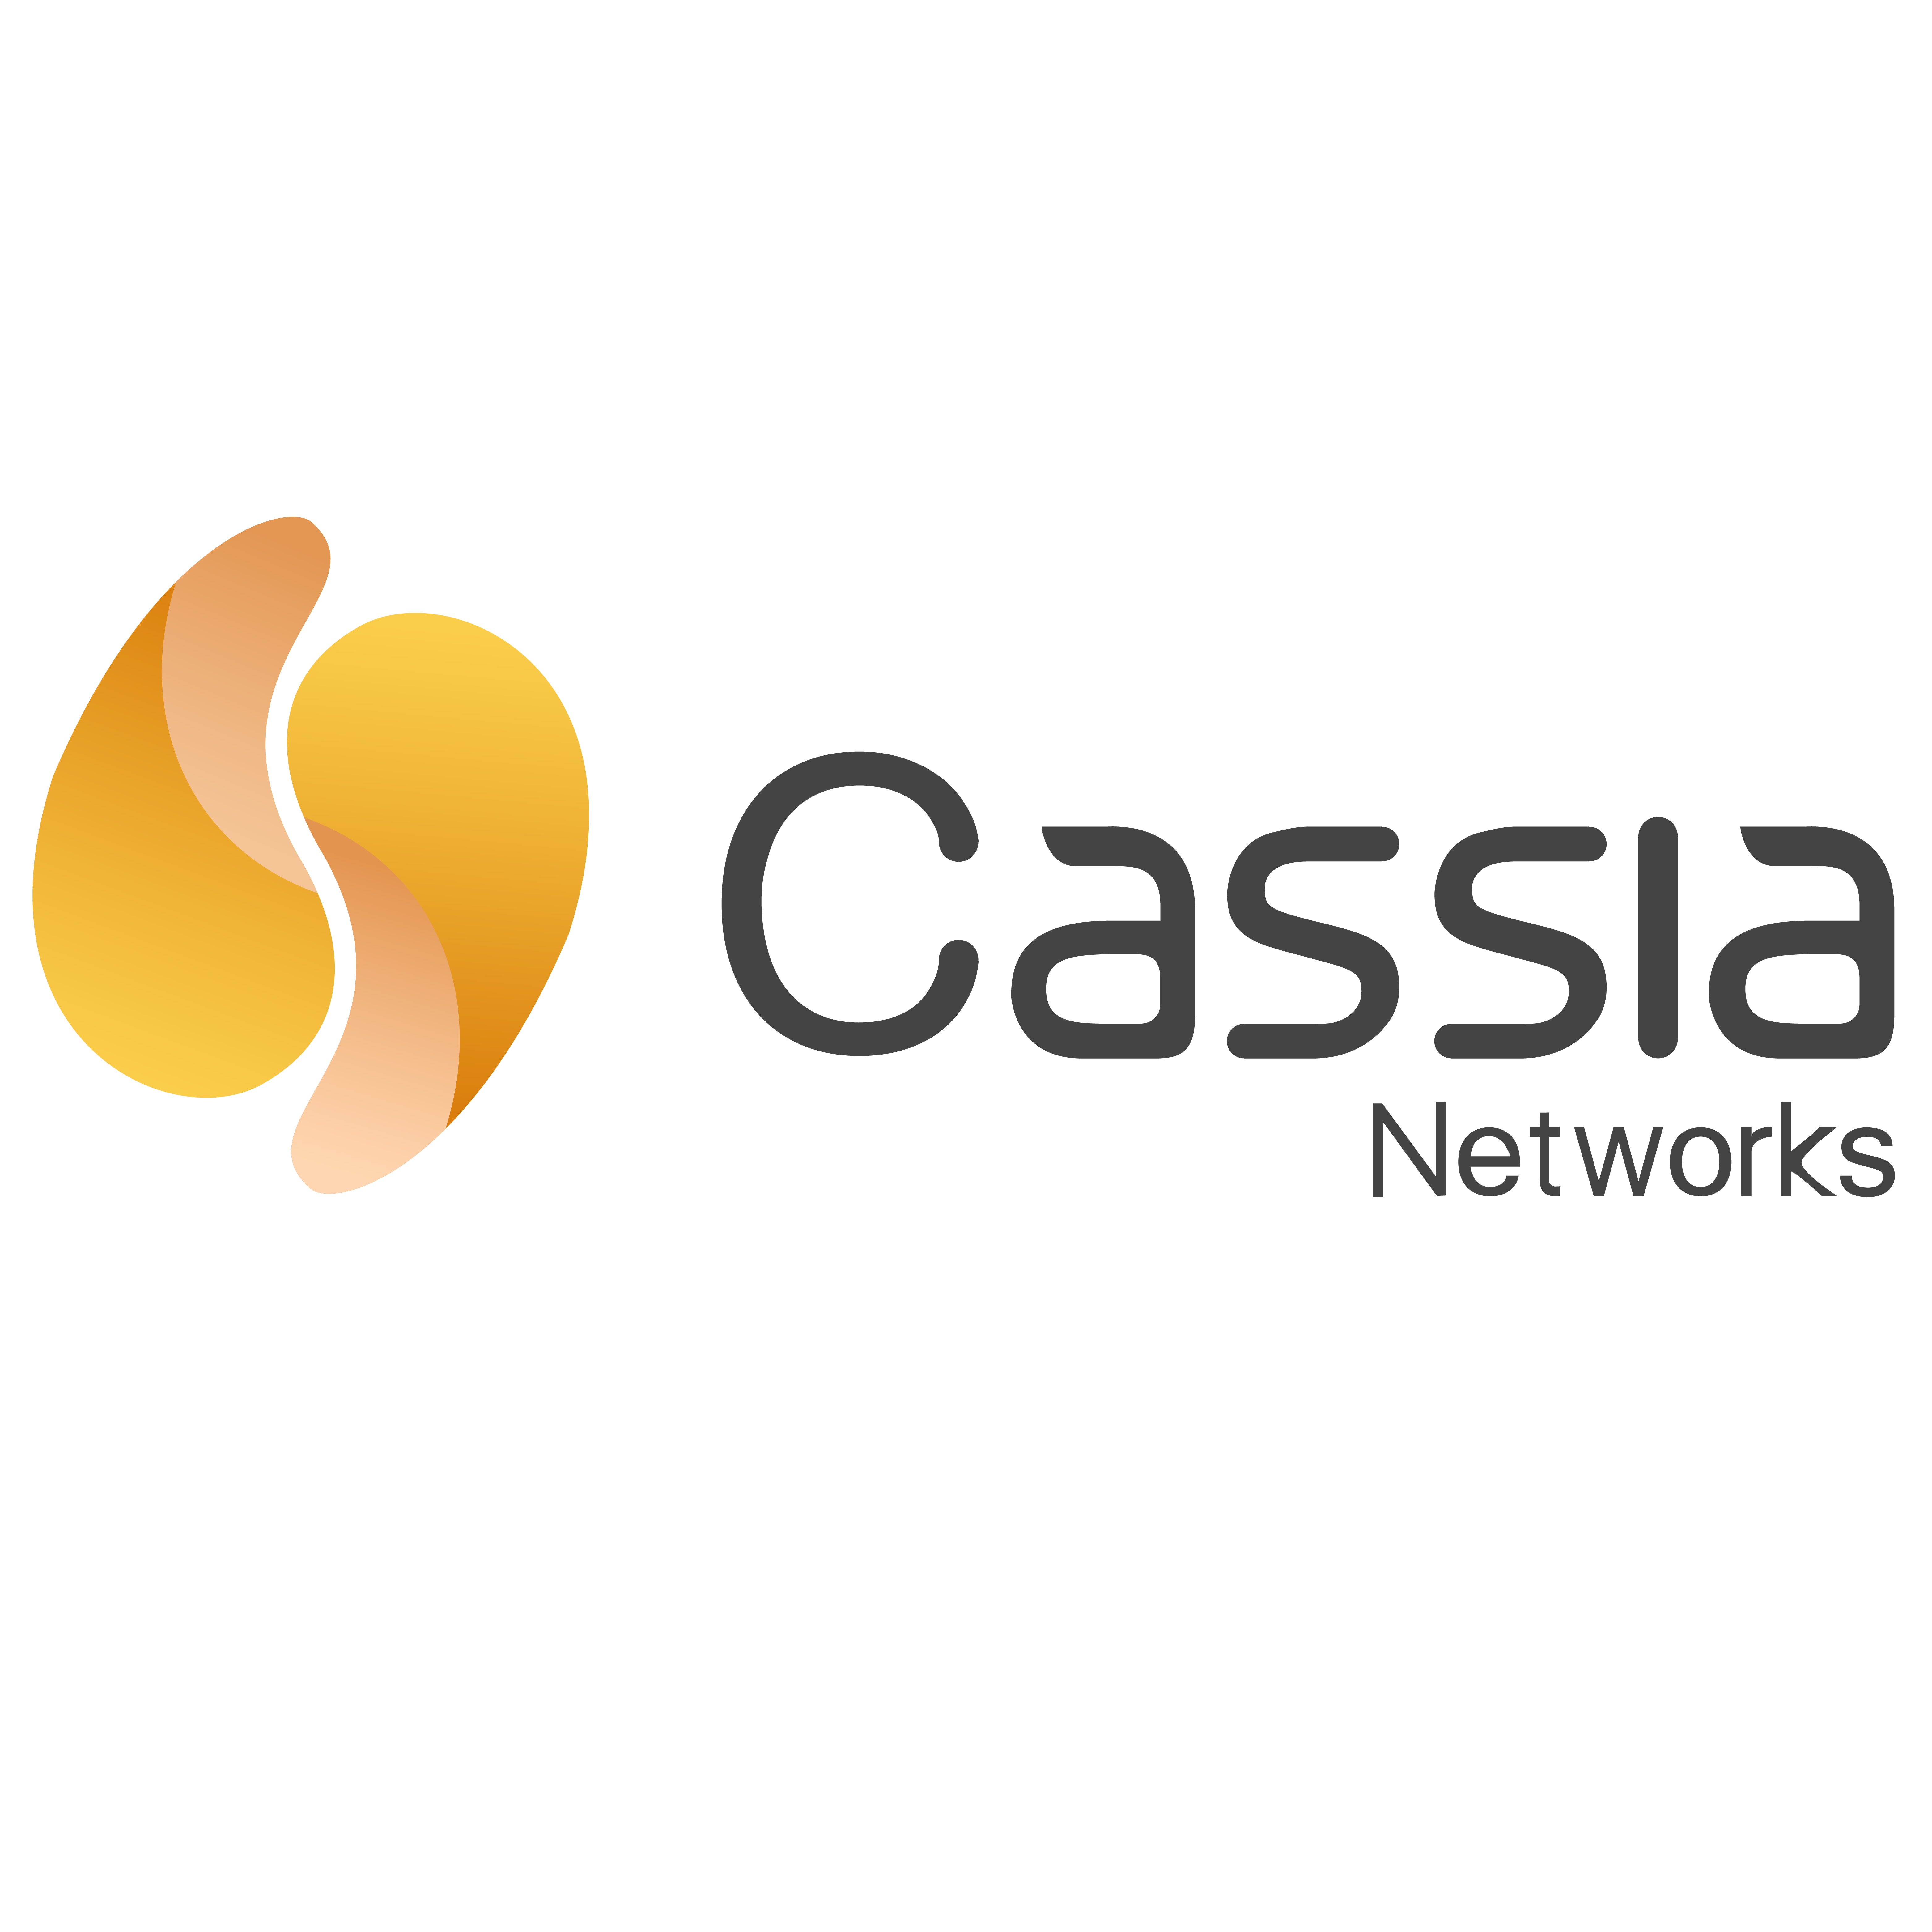 Cassia Networks logo, Image by Cassia